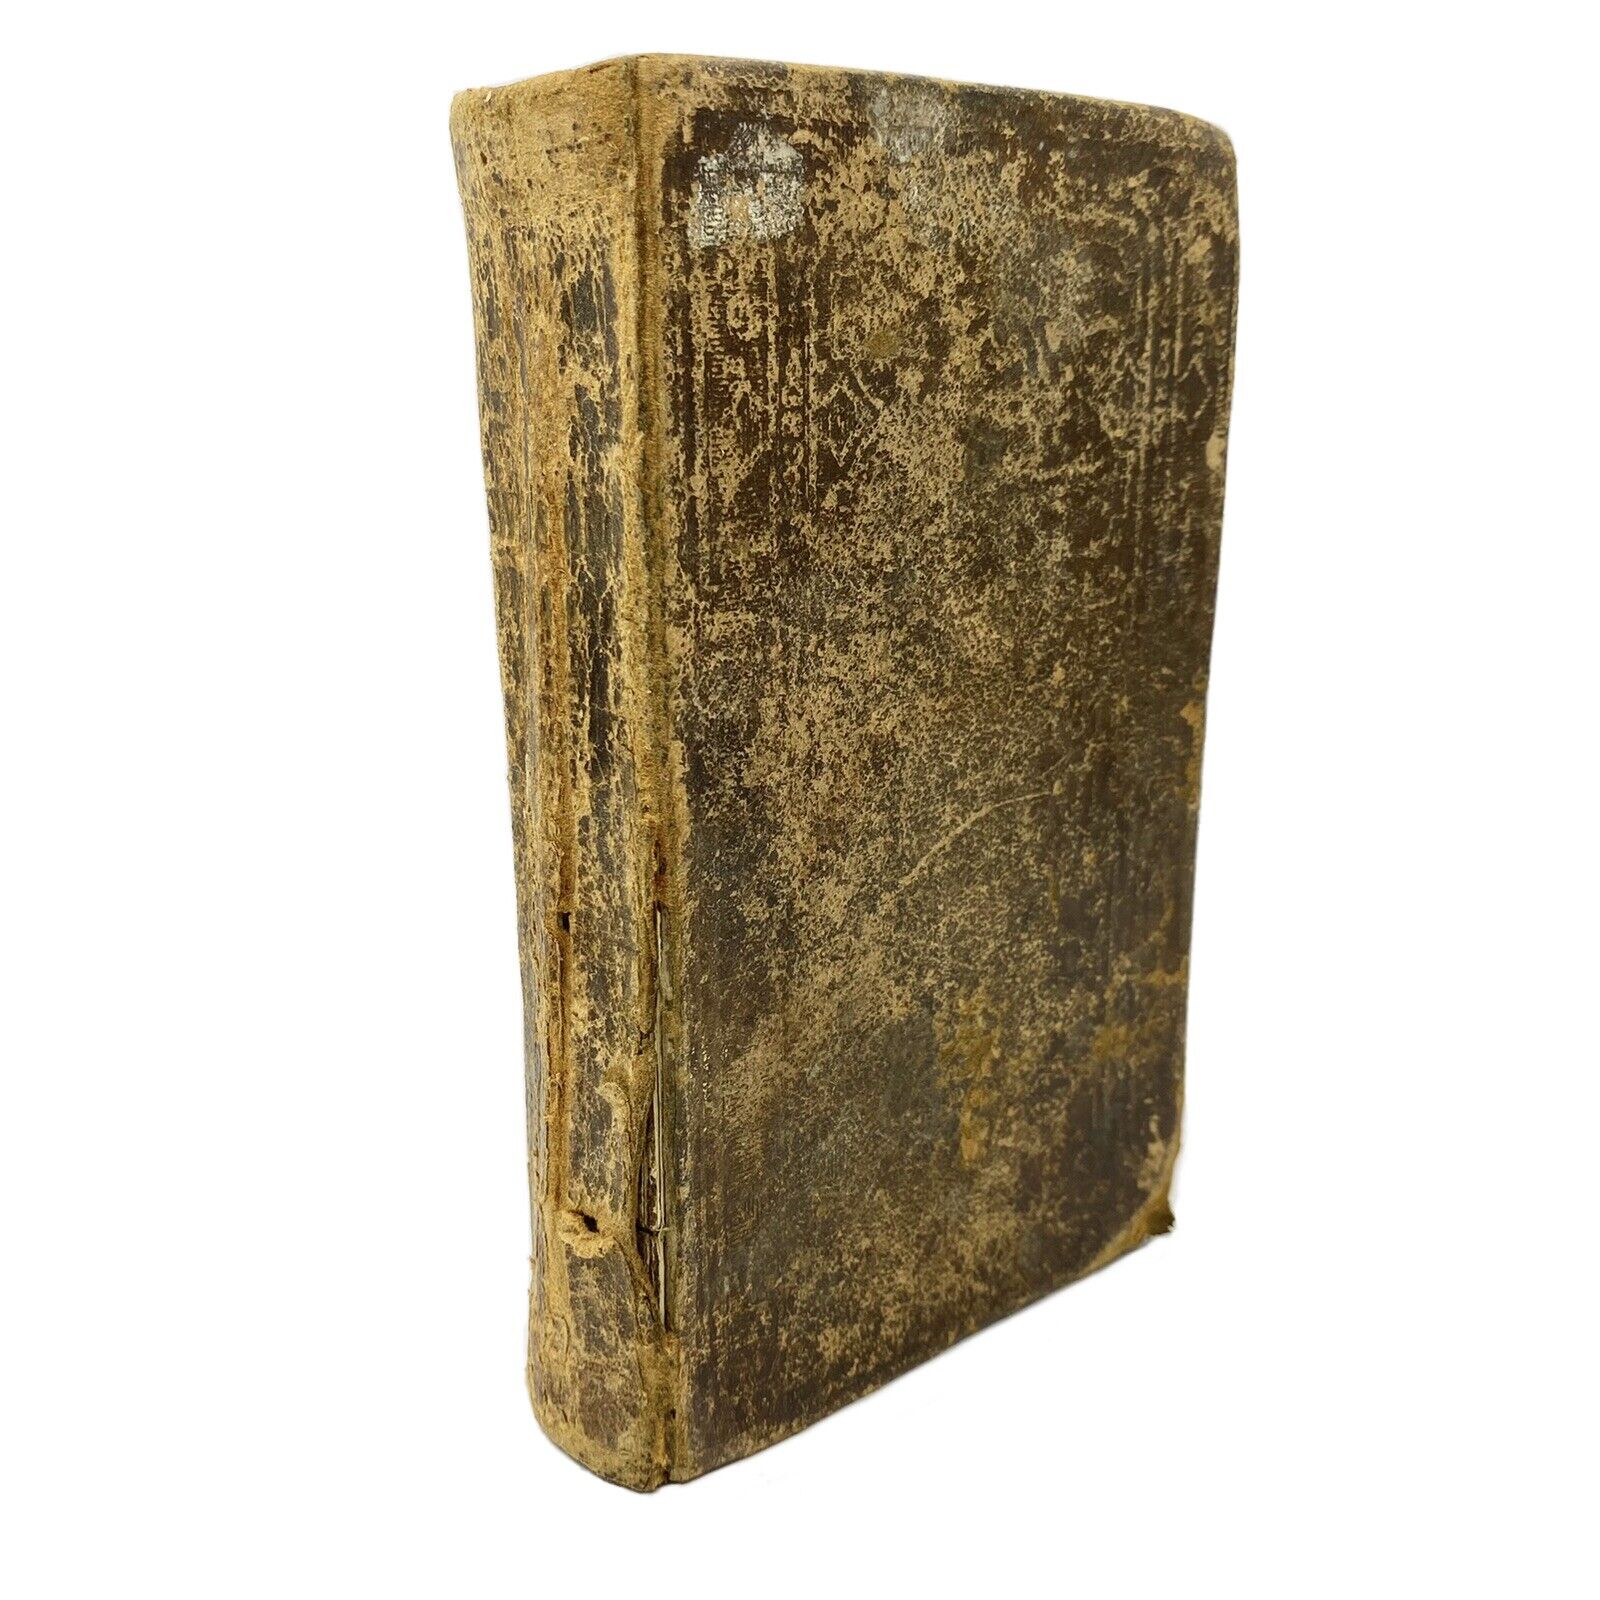 1868 NEW TESTAMENT BIBLE ENGLISH & SWEDISH Translated Original Greek 